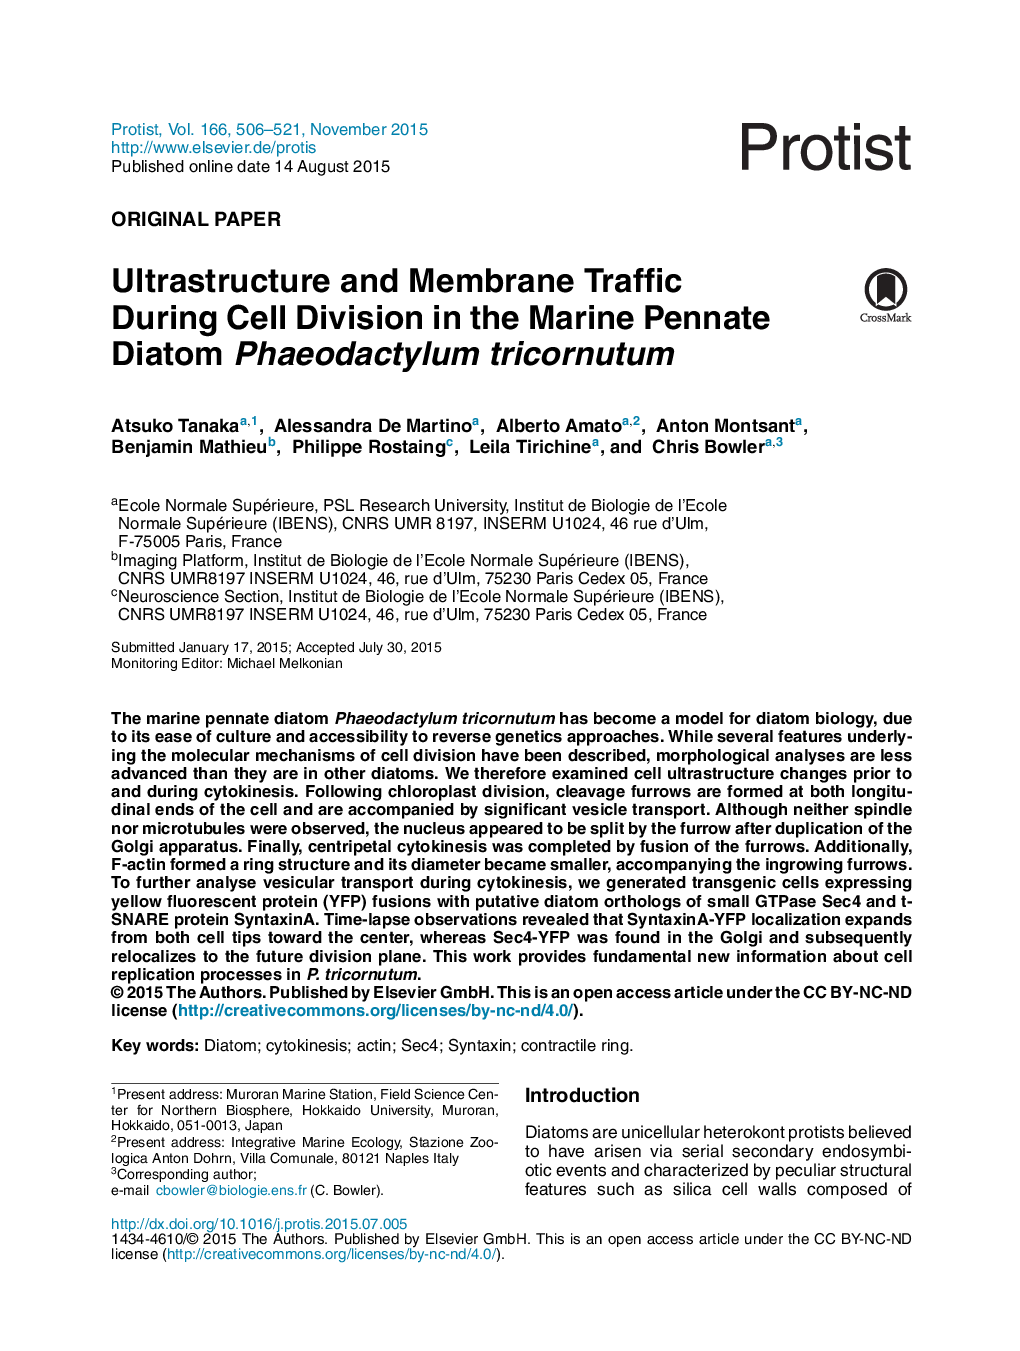 Ultrastructure and Membrane Traffic During Cell Division in the Marine Pennate Diatom Phaeodactylum tricornutum